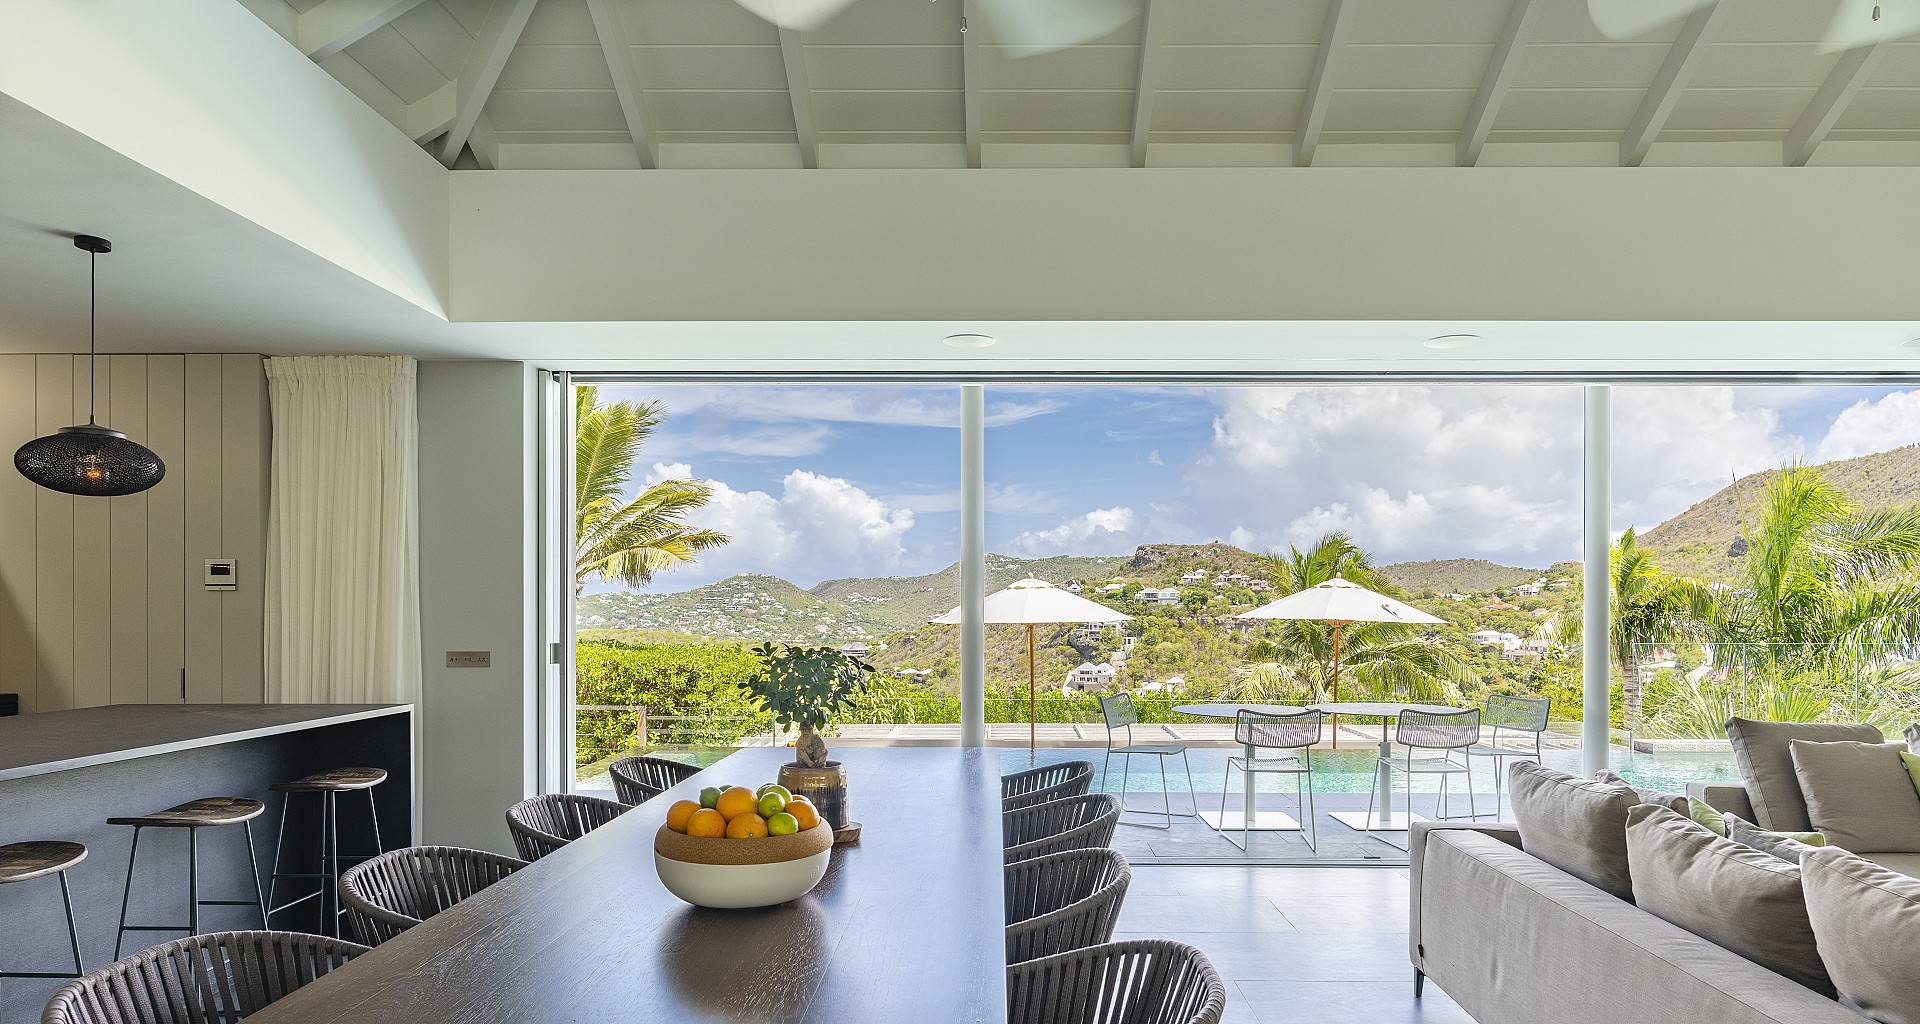 Villa Bakea, St-Barts Vacation Rental, Caribbean, Casol